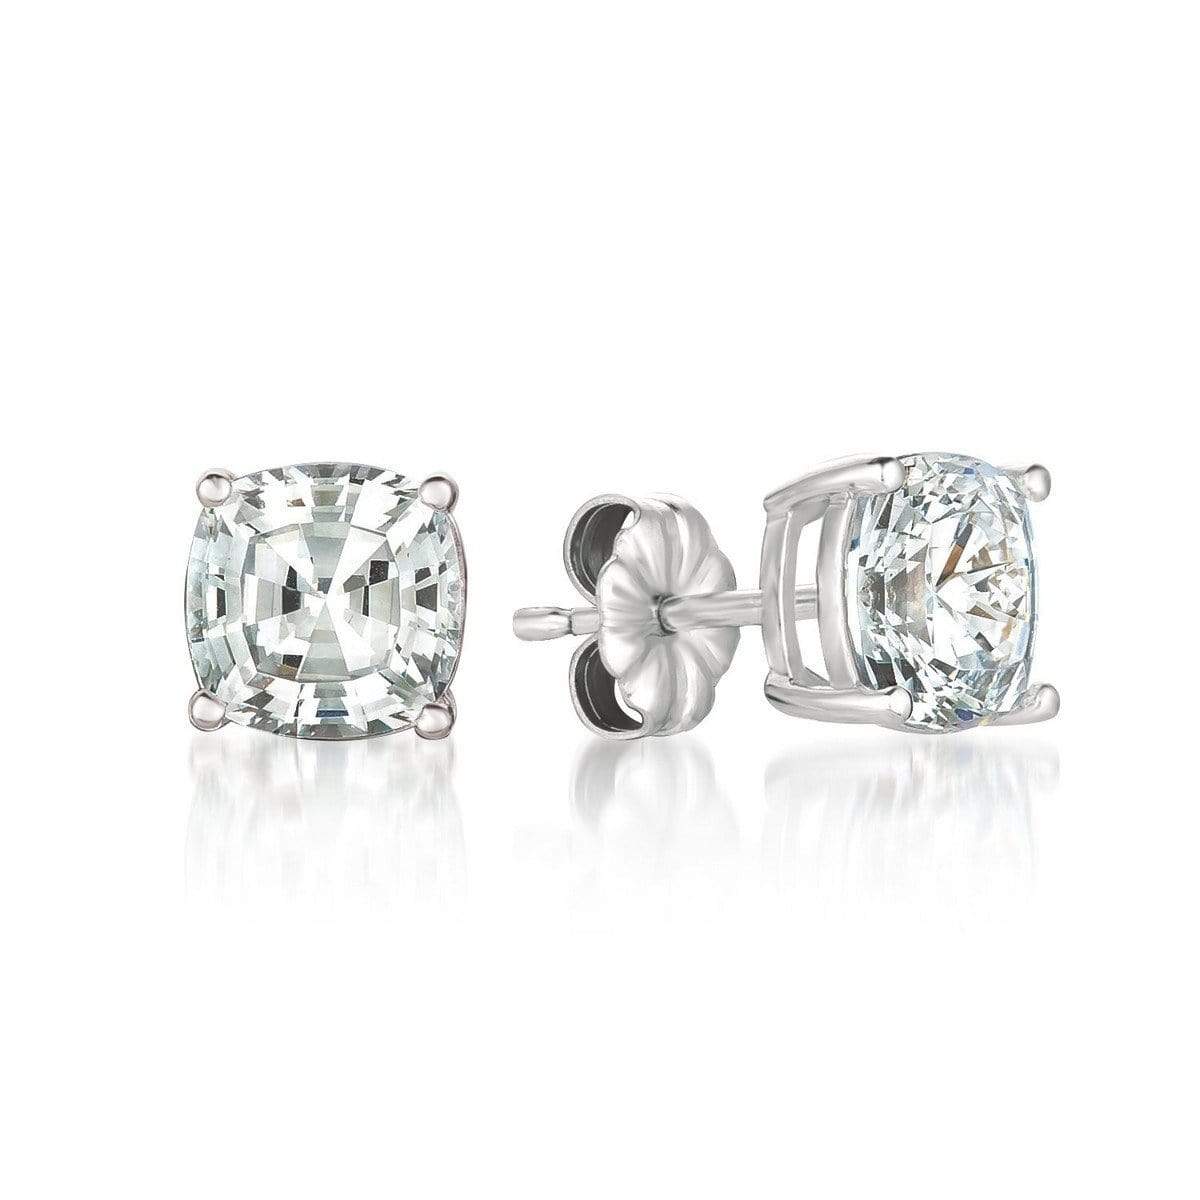 Crislu Jewelry CRISLU Solitaire Asscher Earrings 4.00 Carat Finished in 18KT Pure Platinum